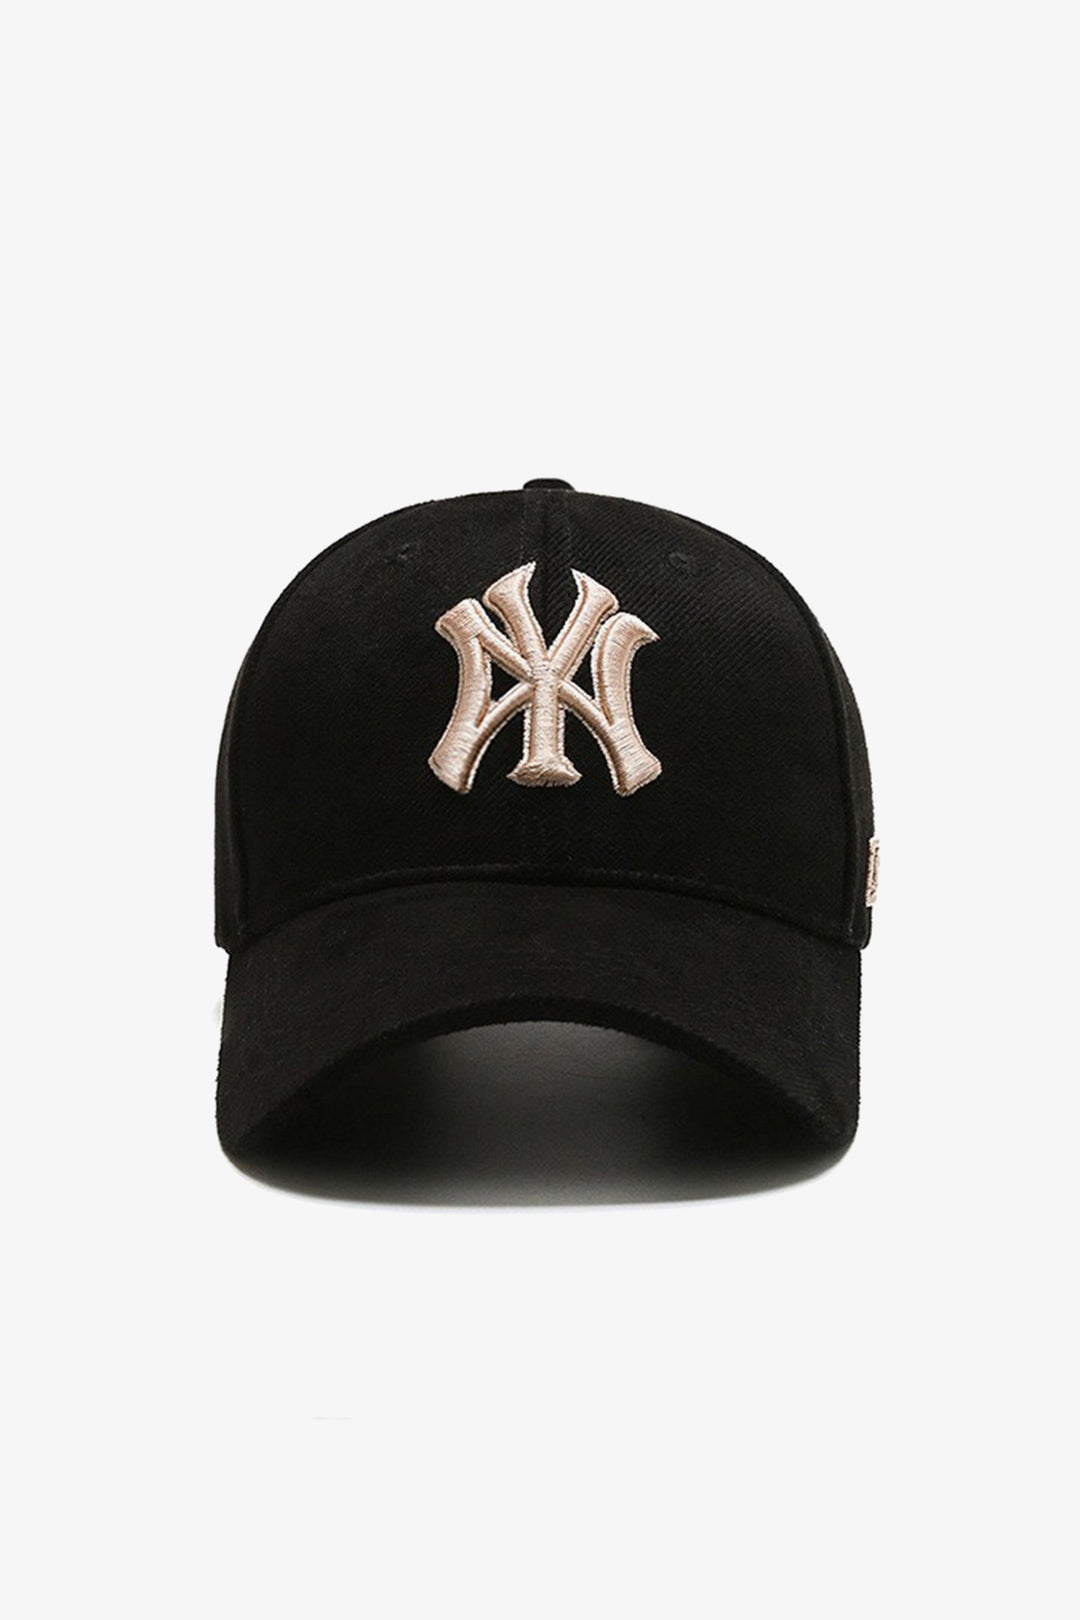 NY Classic Black Baseball Cap - A23 - MCP076R